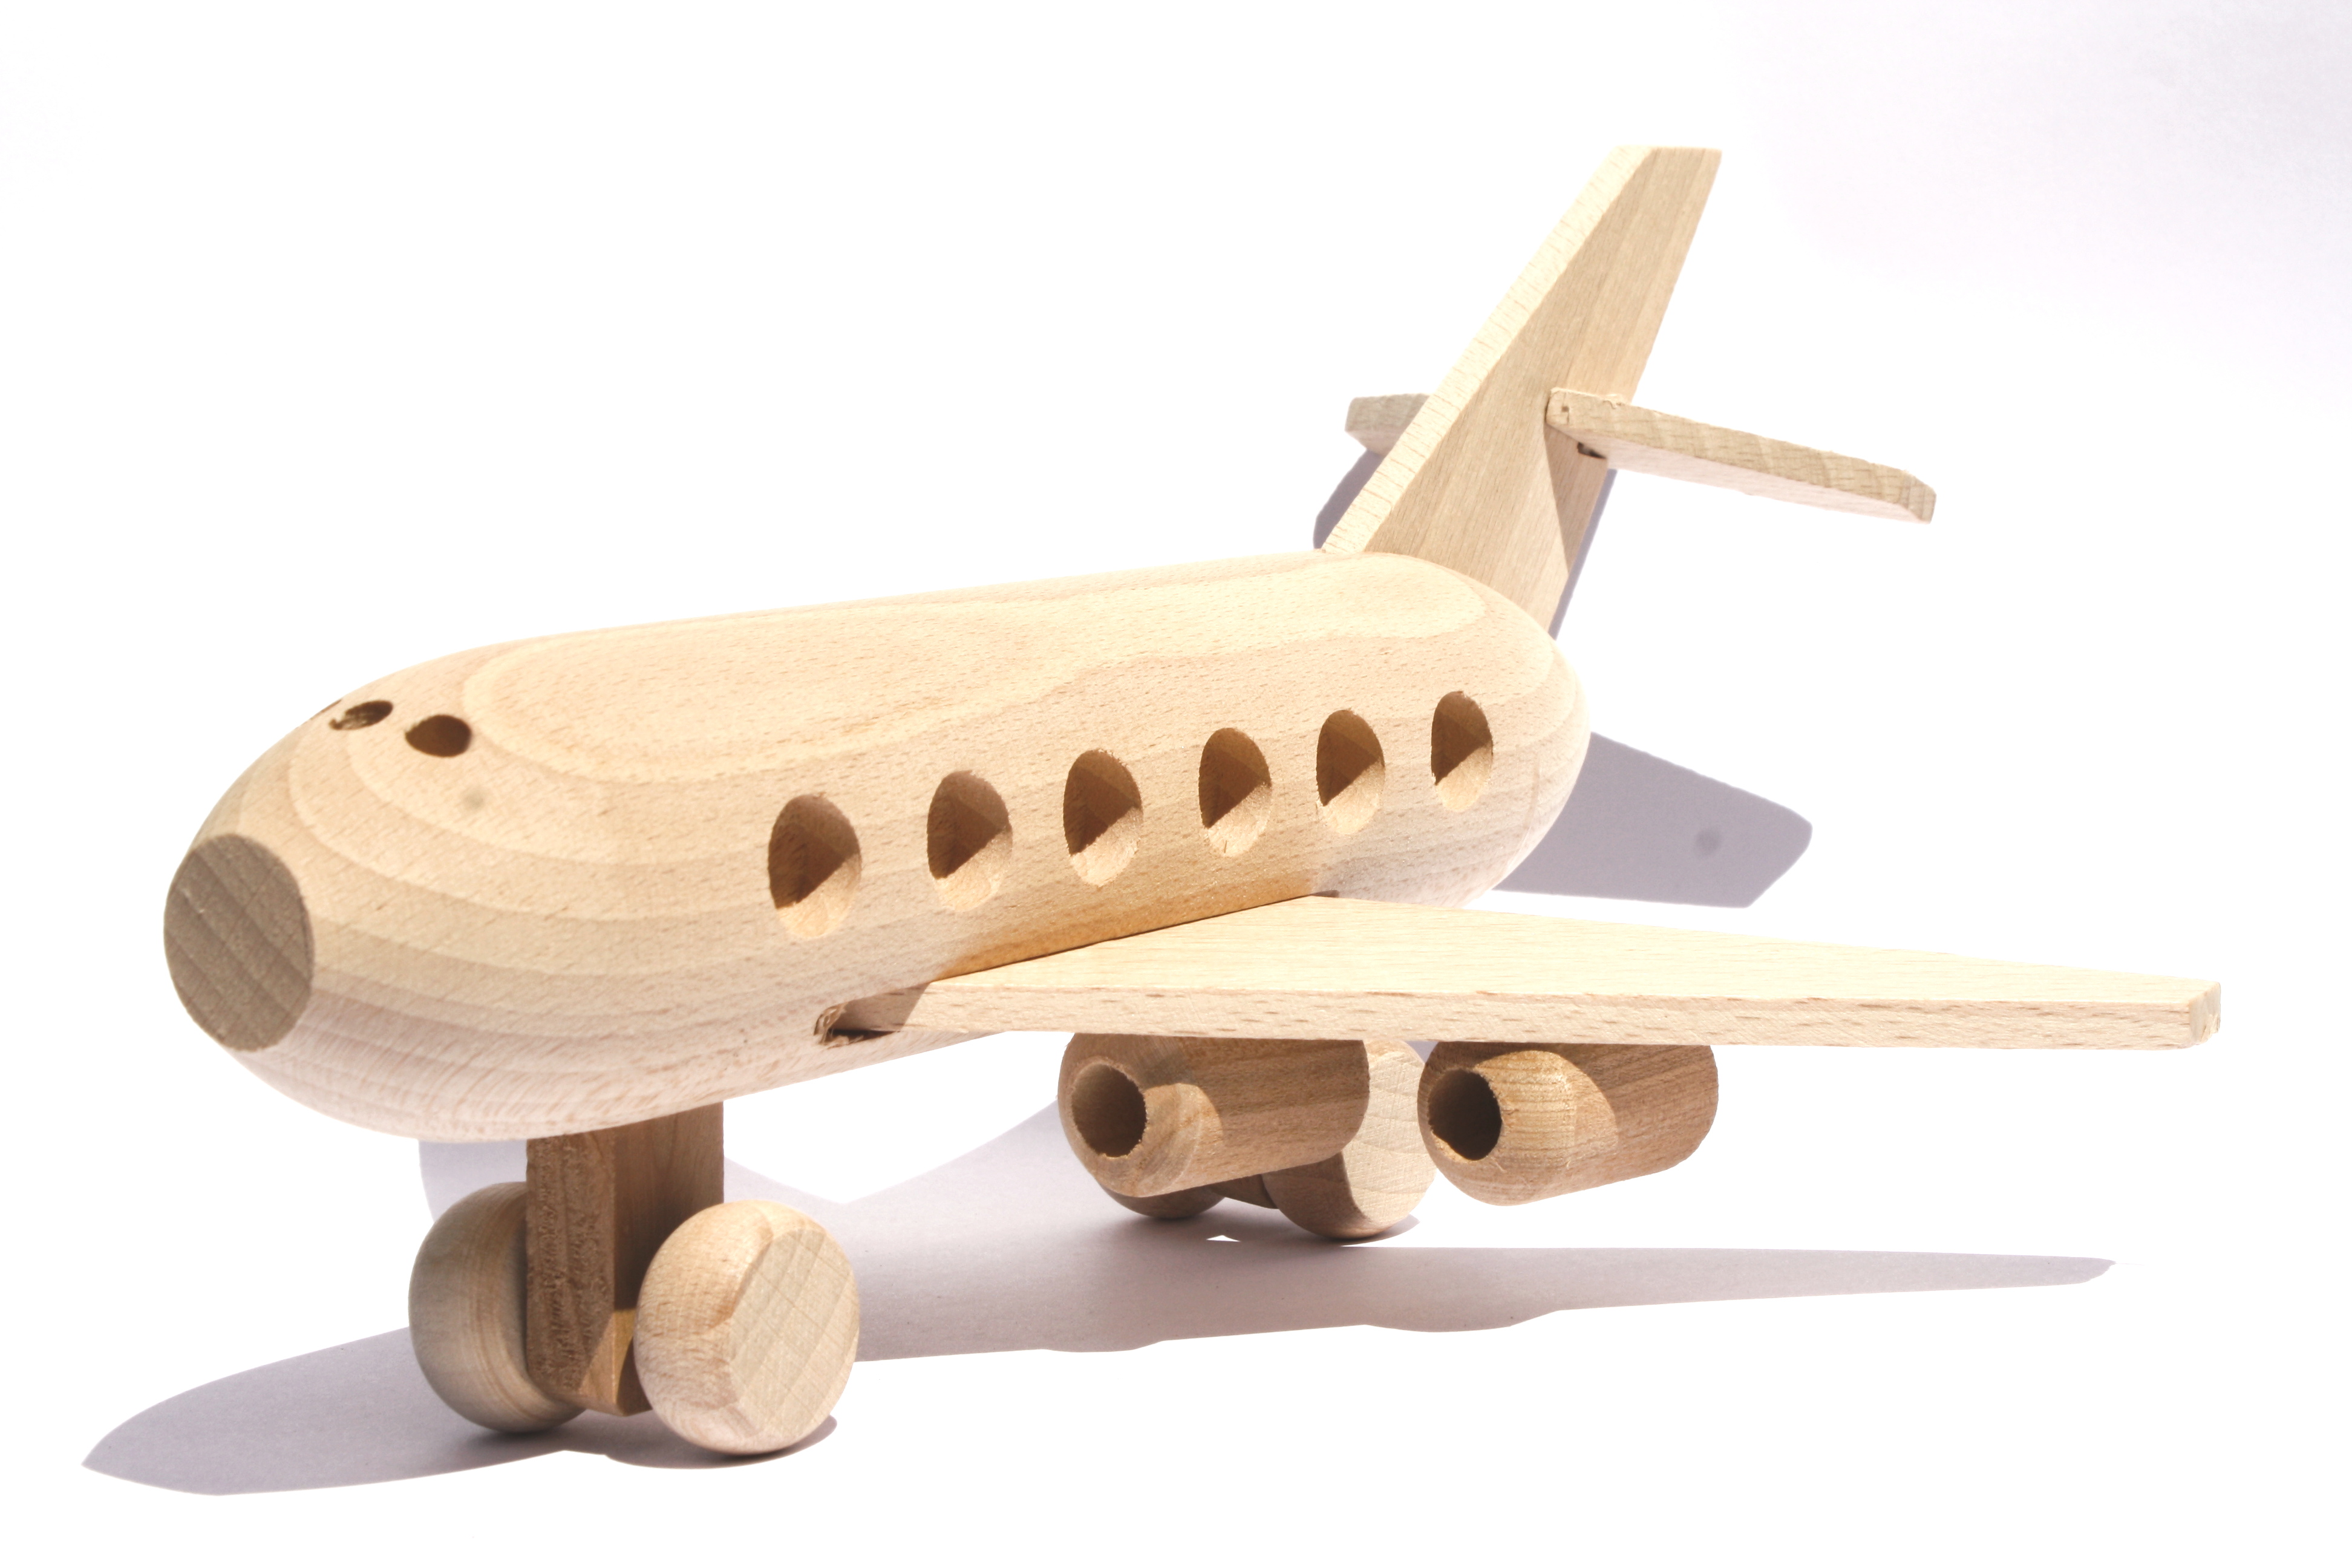 Wooden Vehicles - modern plane 